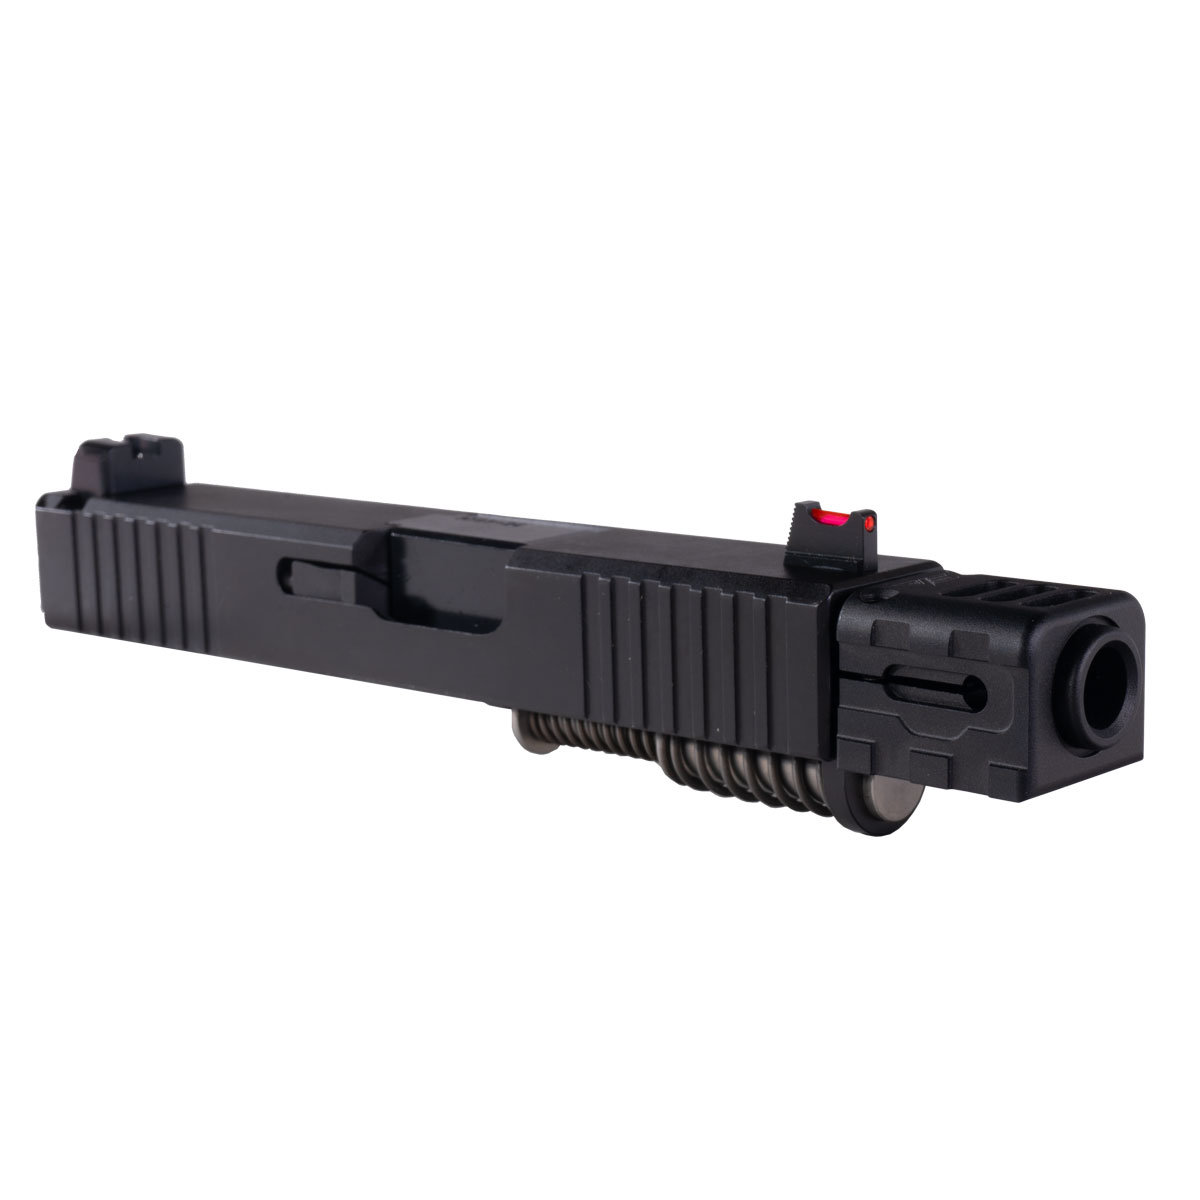 DTT 'Simum w/ Sylvan Arms Compensator' 9mm Complete Slide Kit - Glock 26 Gen 1-2 Compatible